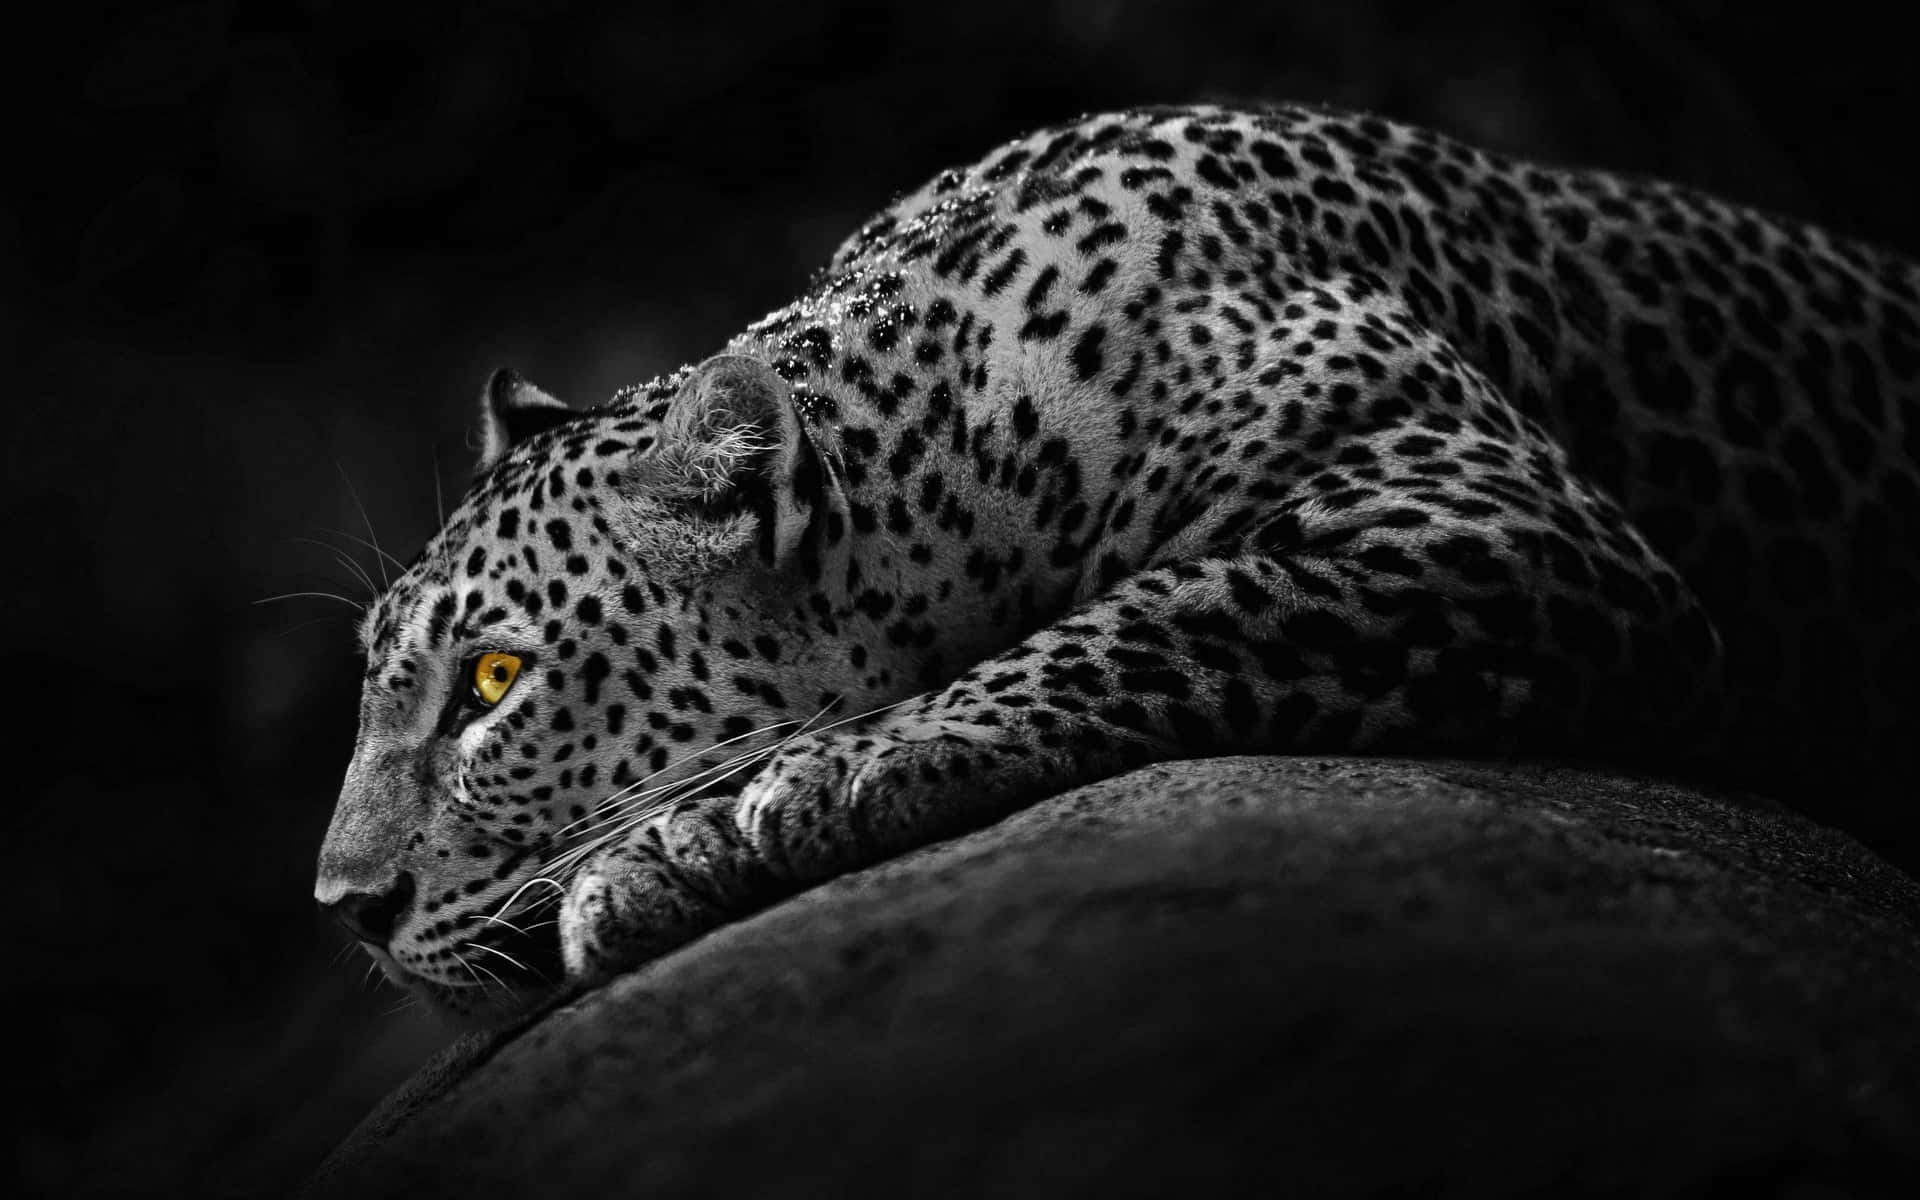 An Intimidating Glance of a Powerful Jaguar